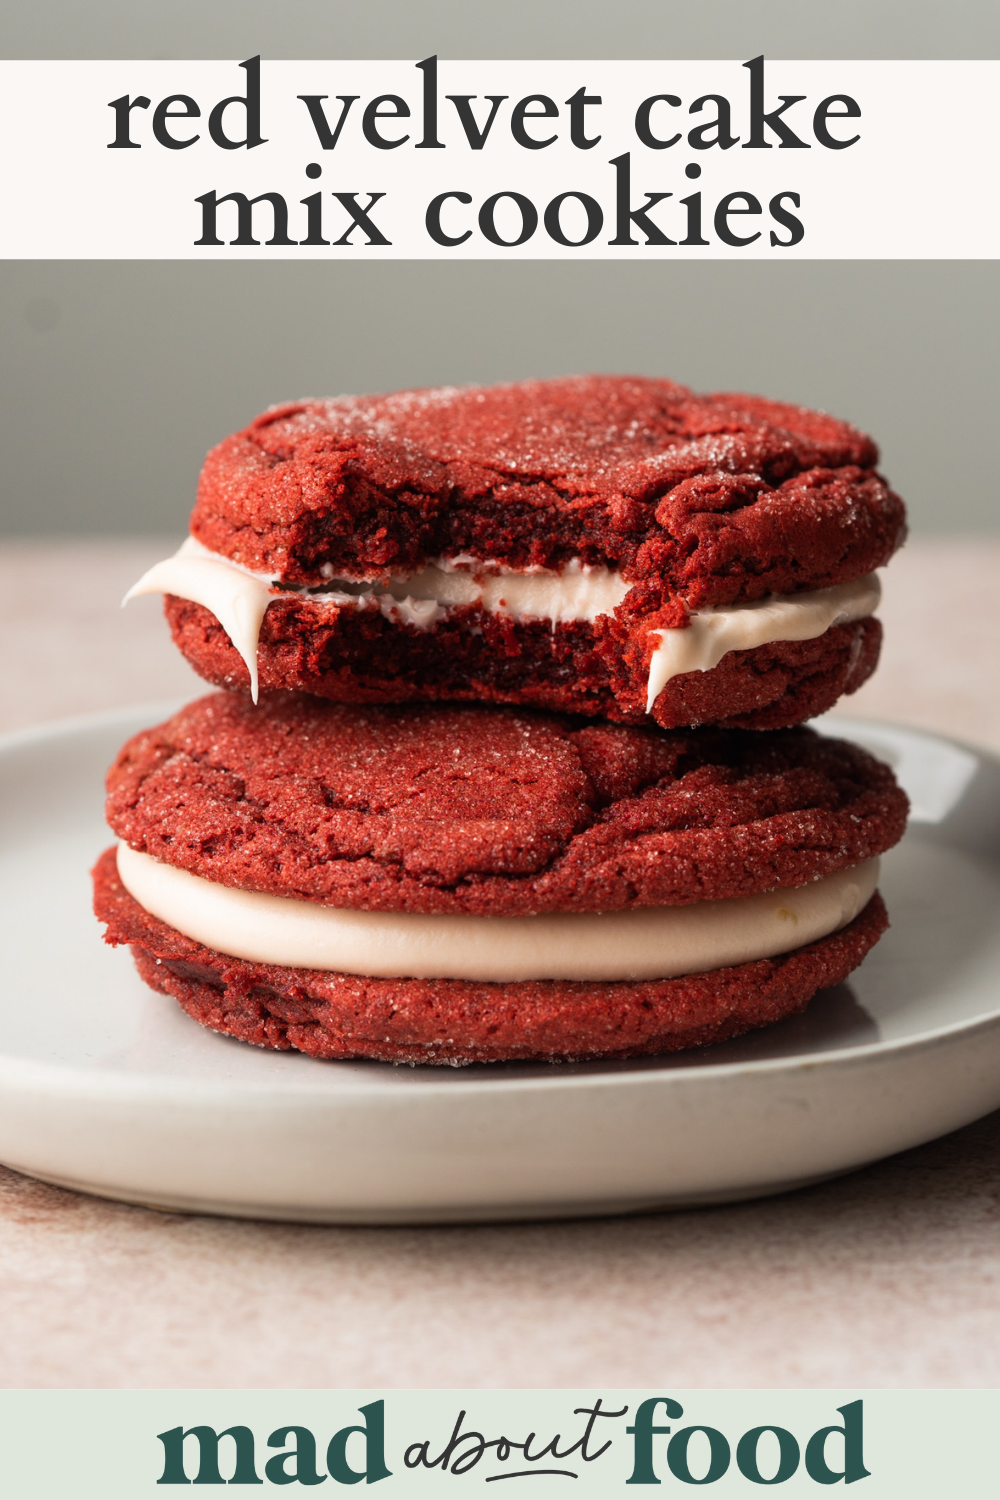 Image for pinning Red Velvet Cake Mix Cookies recipe on Pinterest